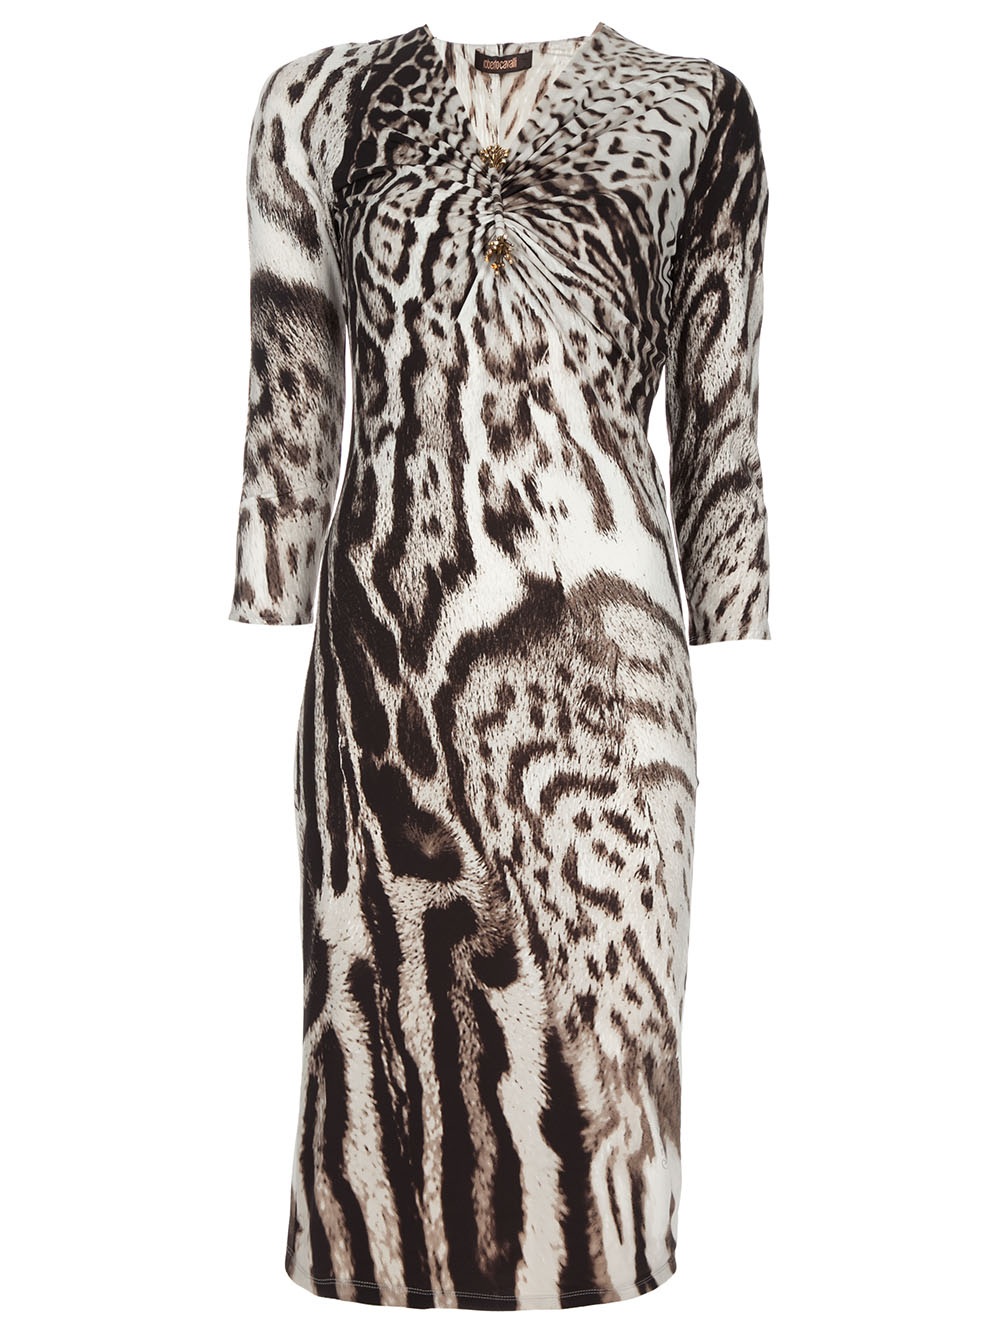 Roberto Cavalli Animal Print Dress in Animal | Lyst